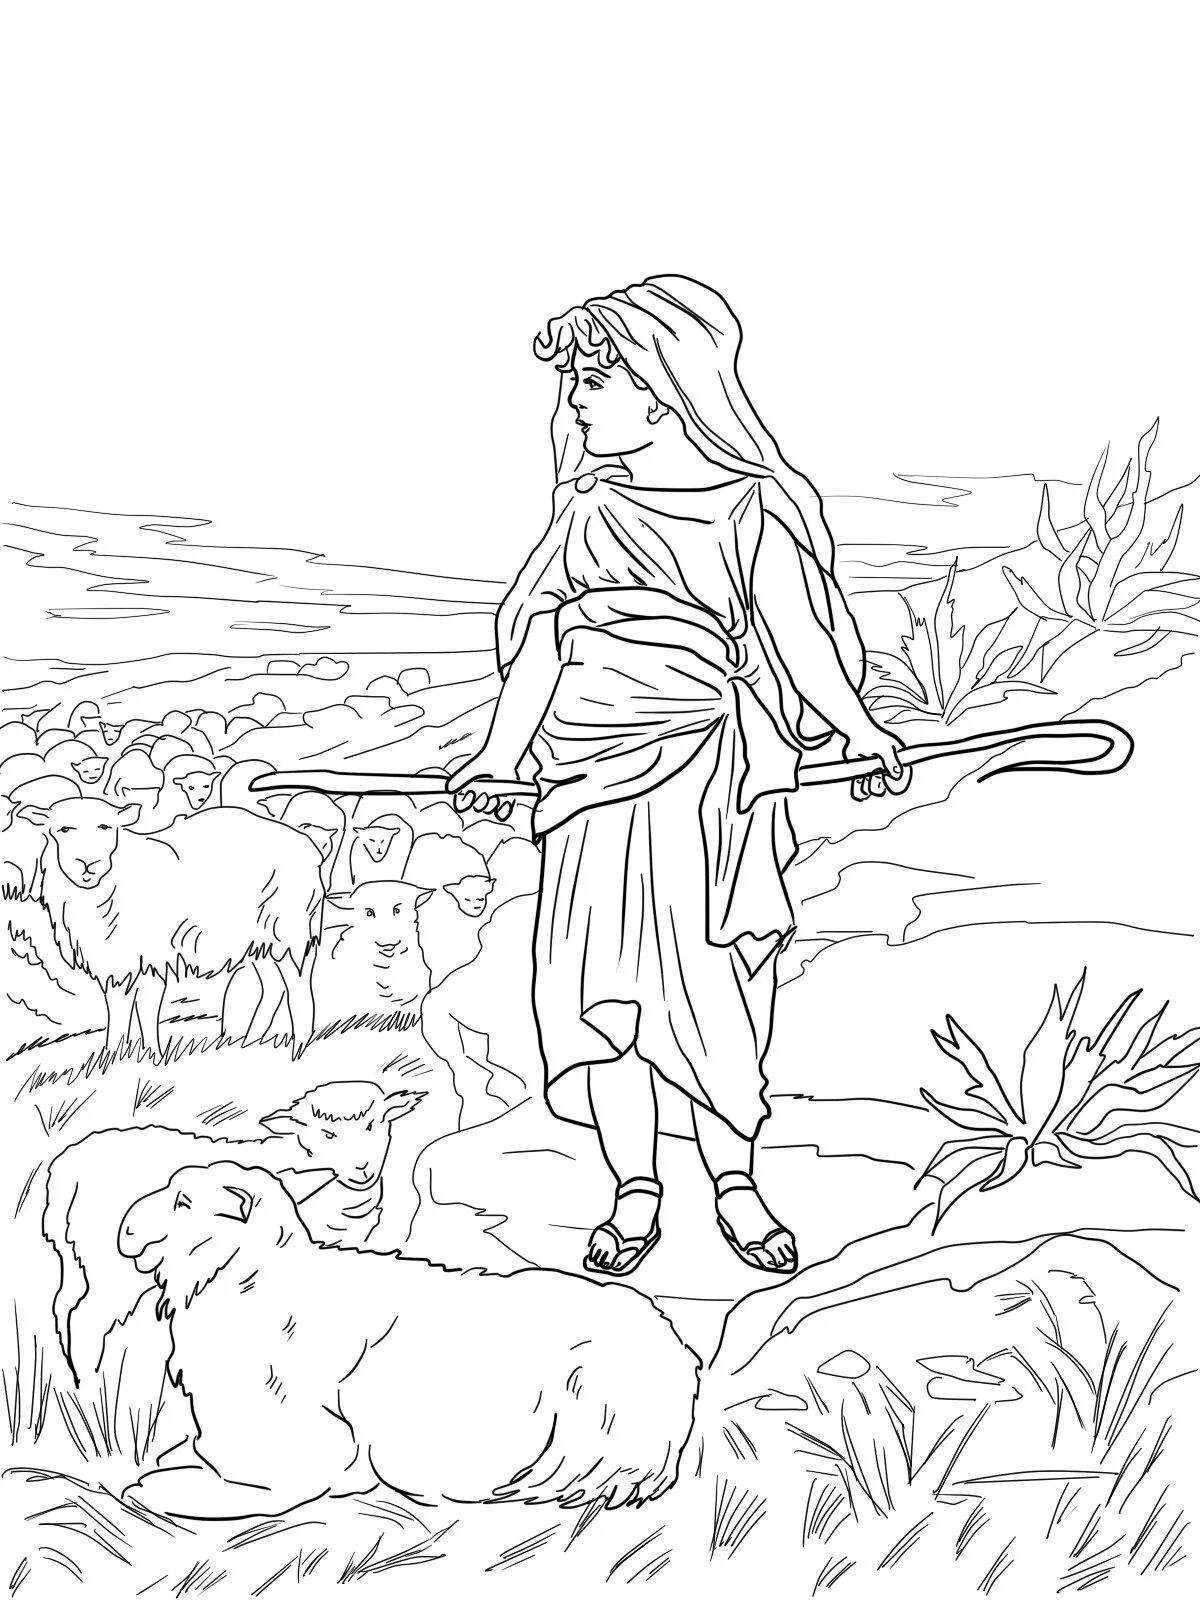 Color-explosion shepherd lel coloring page